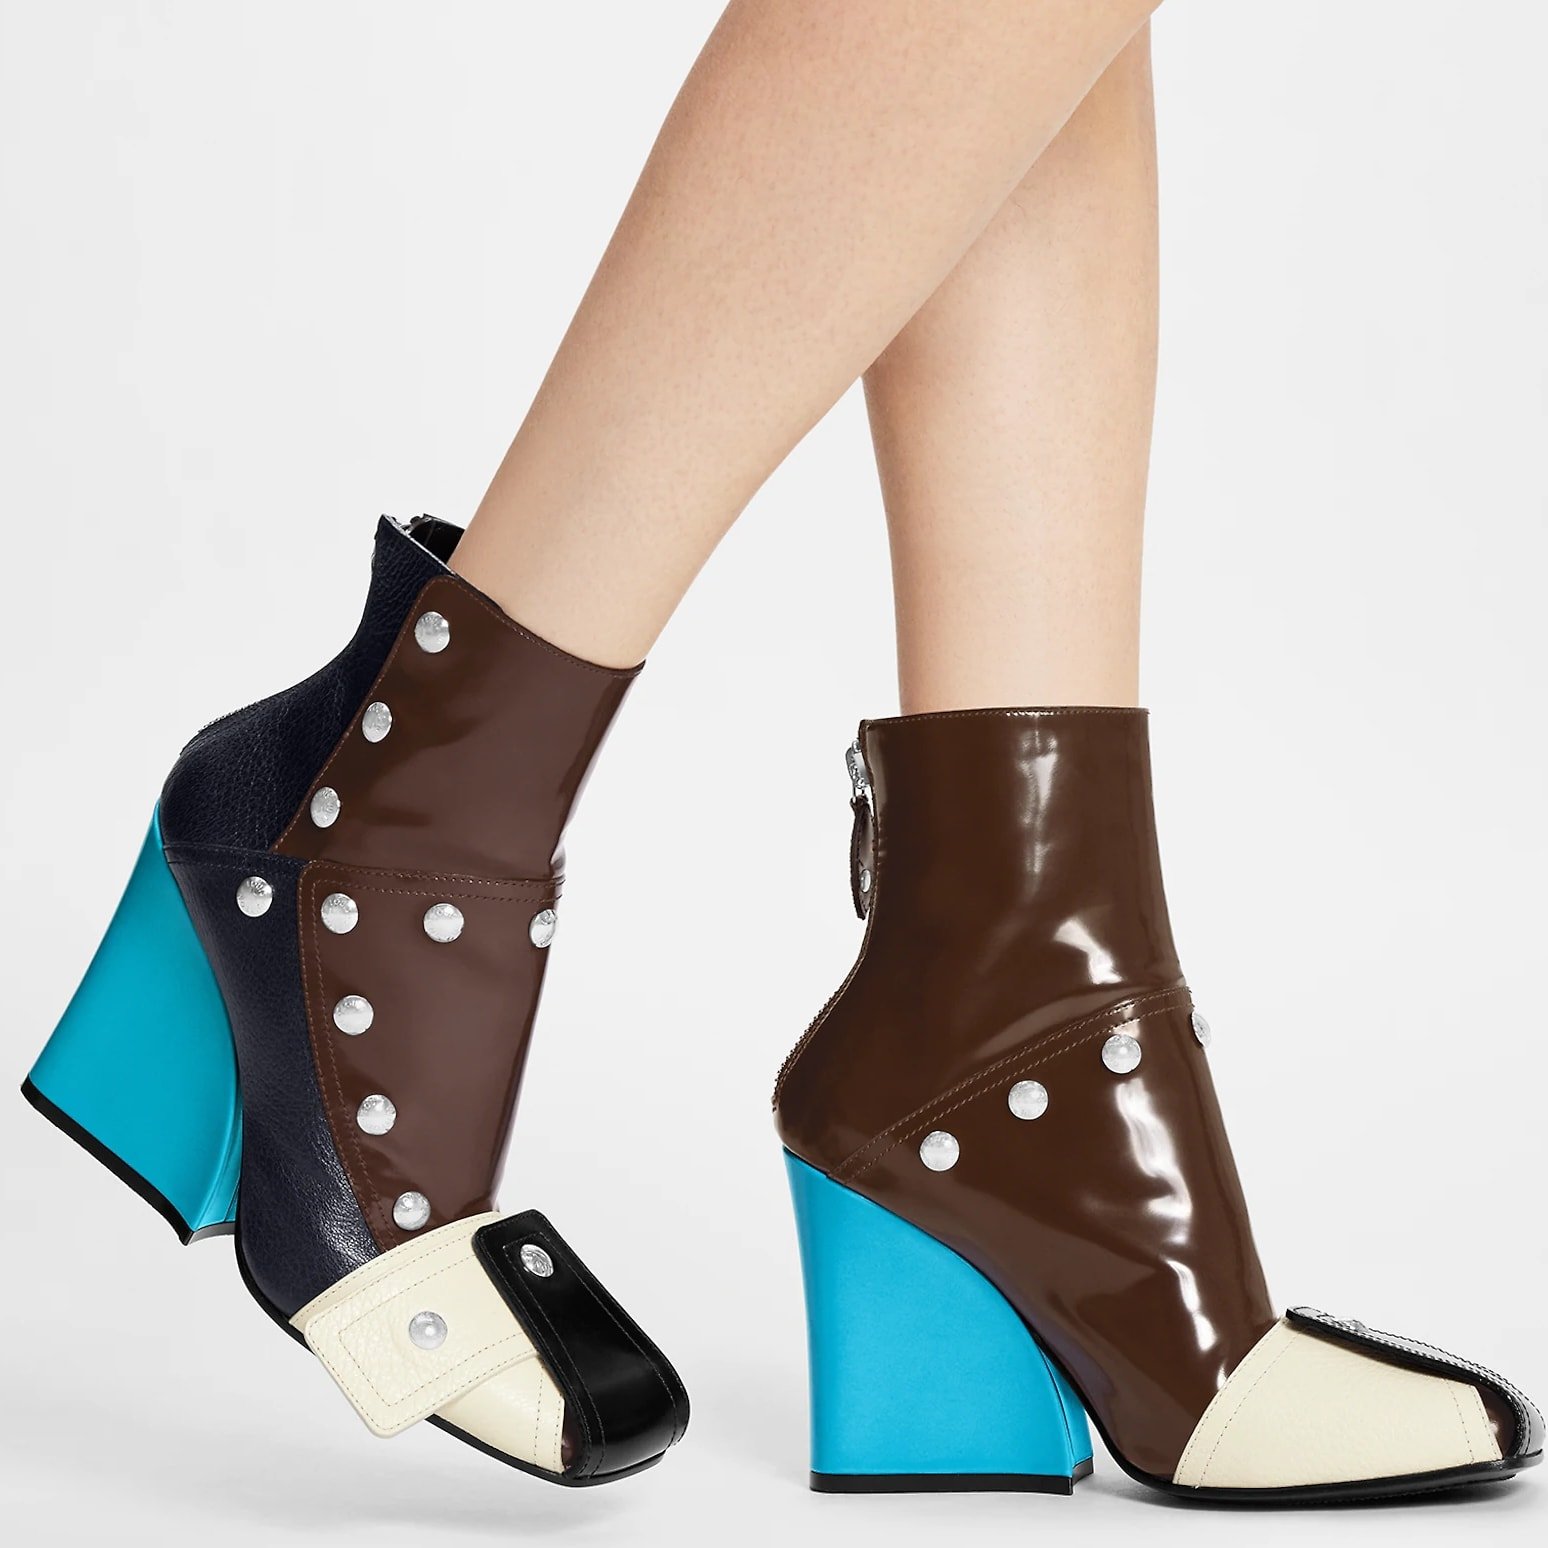 Chiara Ferragni Rocks LV's Patti Wedge Ankle Boots in Paris